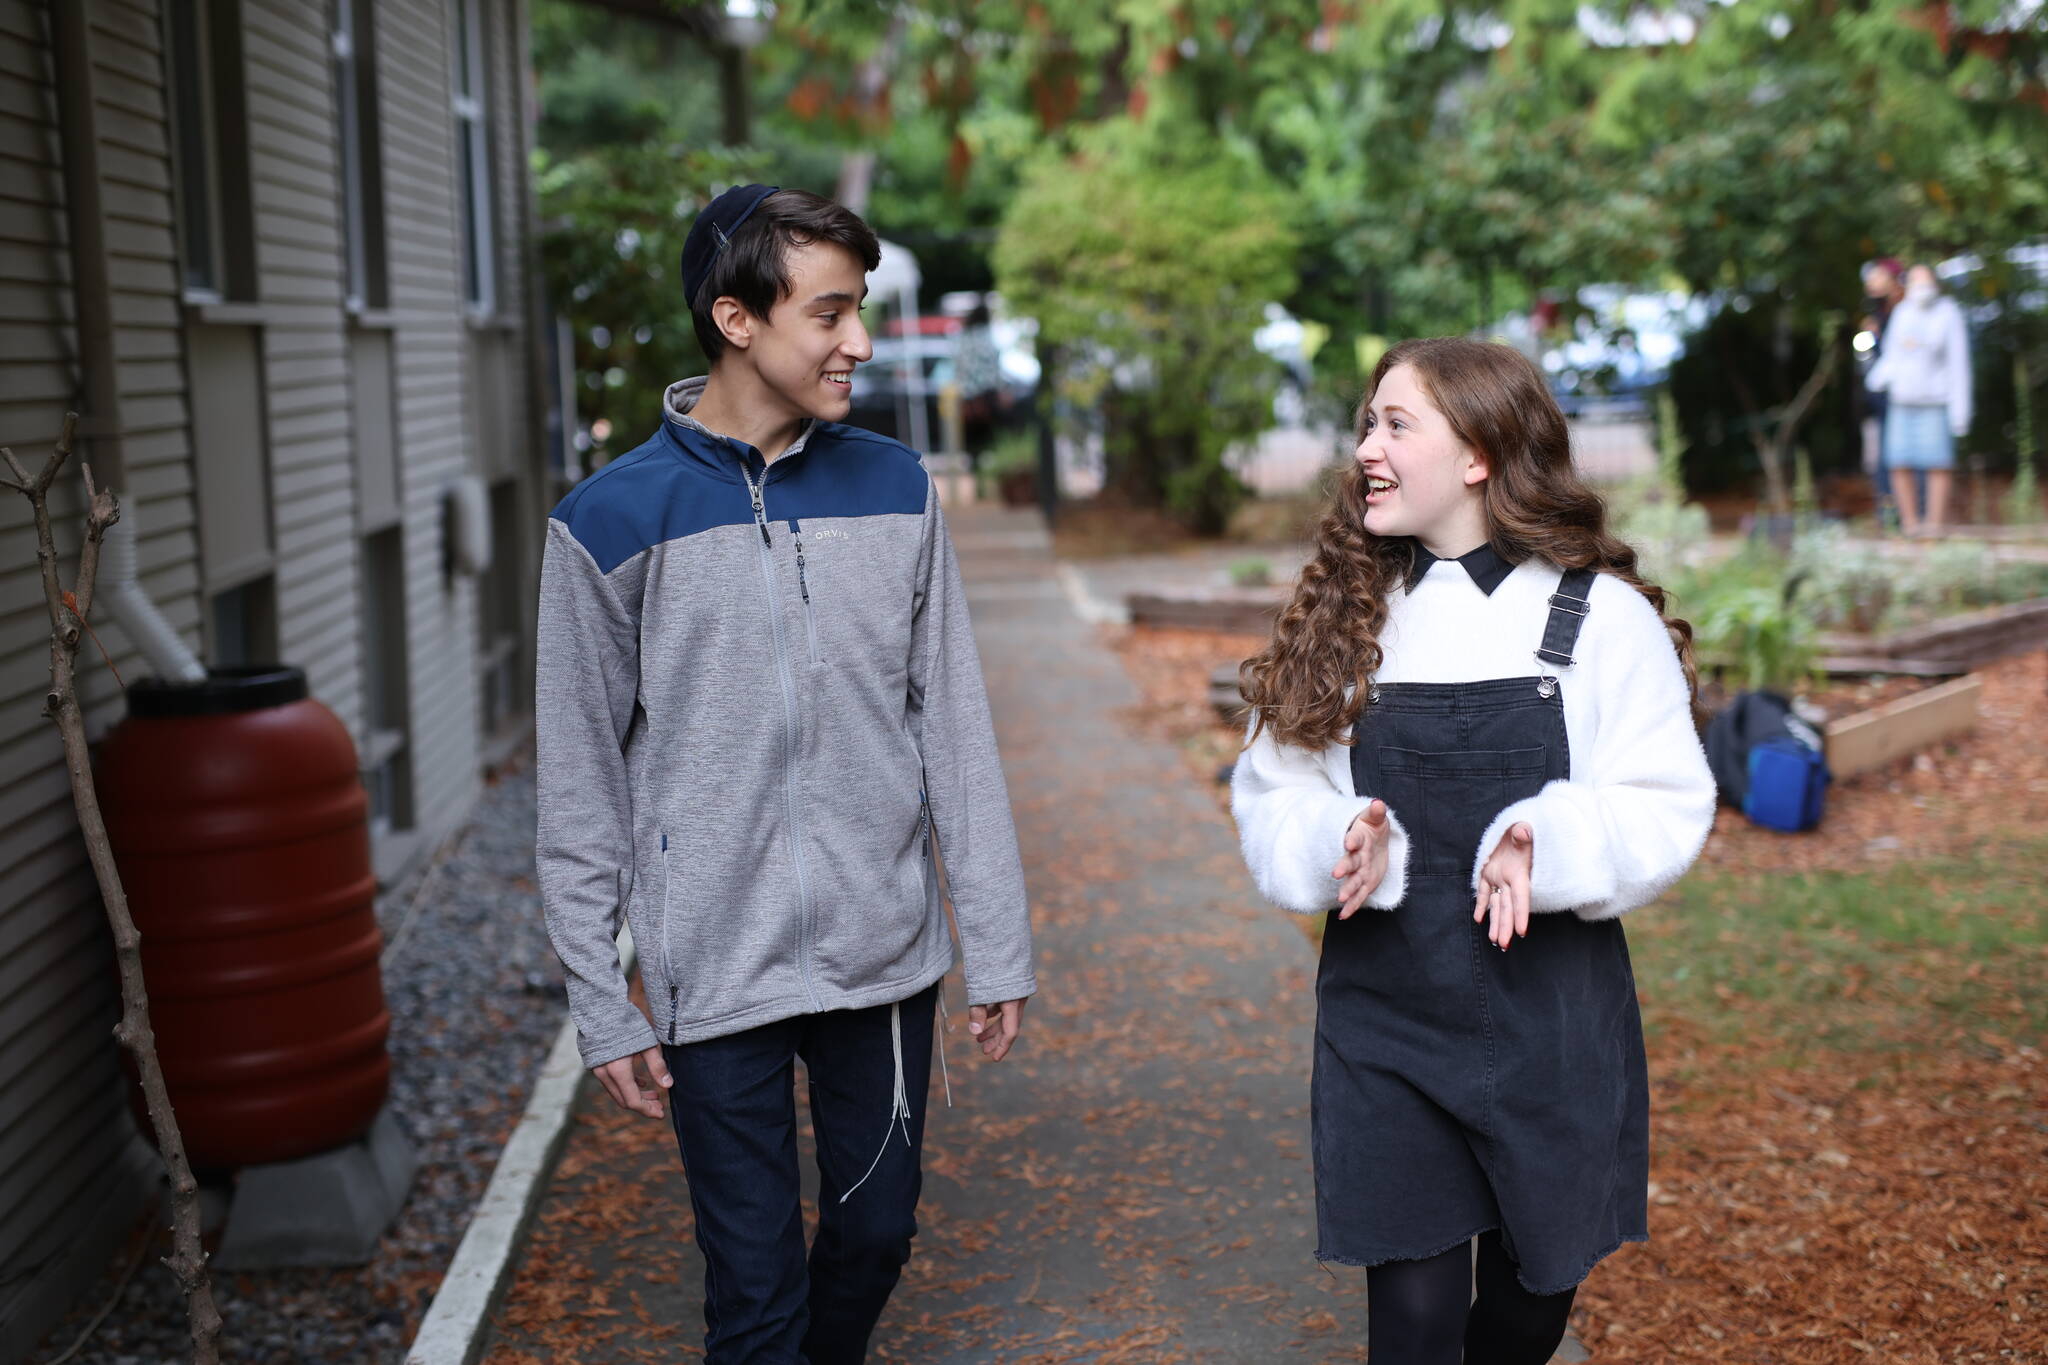 Northwest Yeshiva High School students Max Kutepov and Ariana Balkany stroll through the Mercer Island campus. Courtesy of David Jacoby